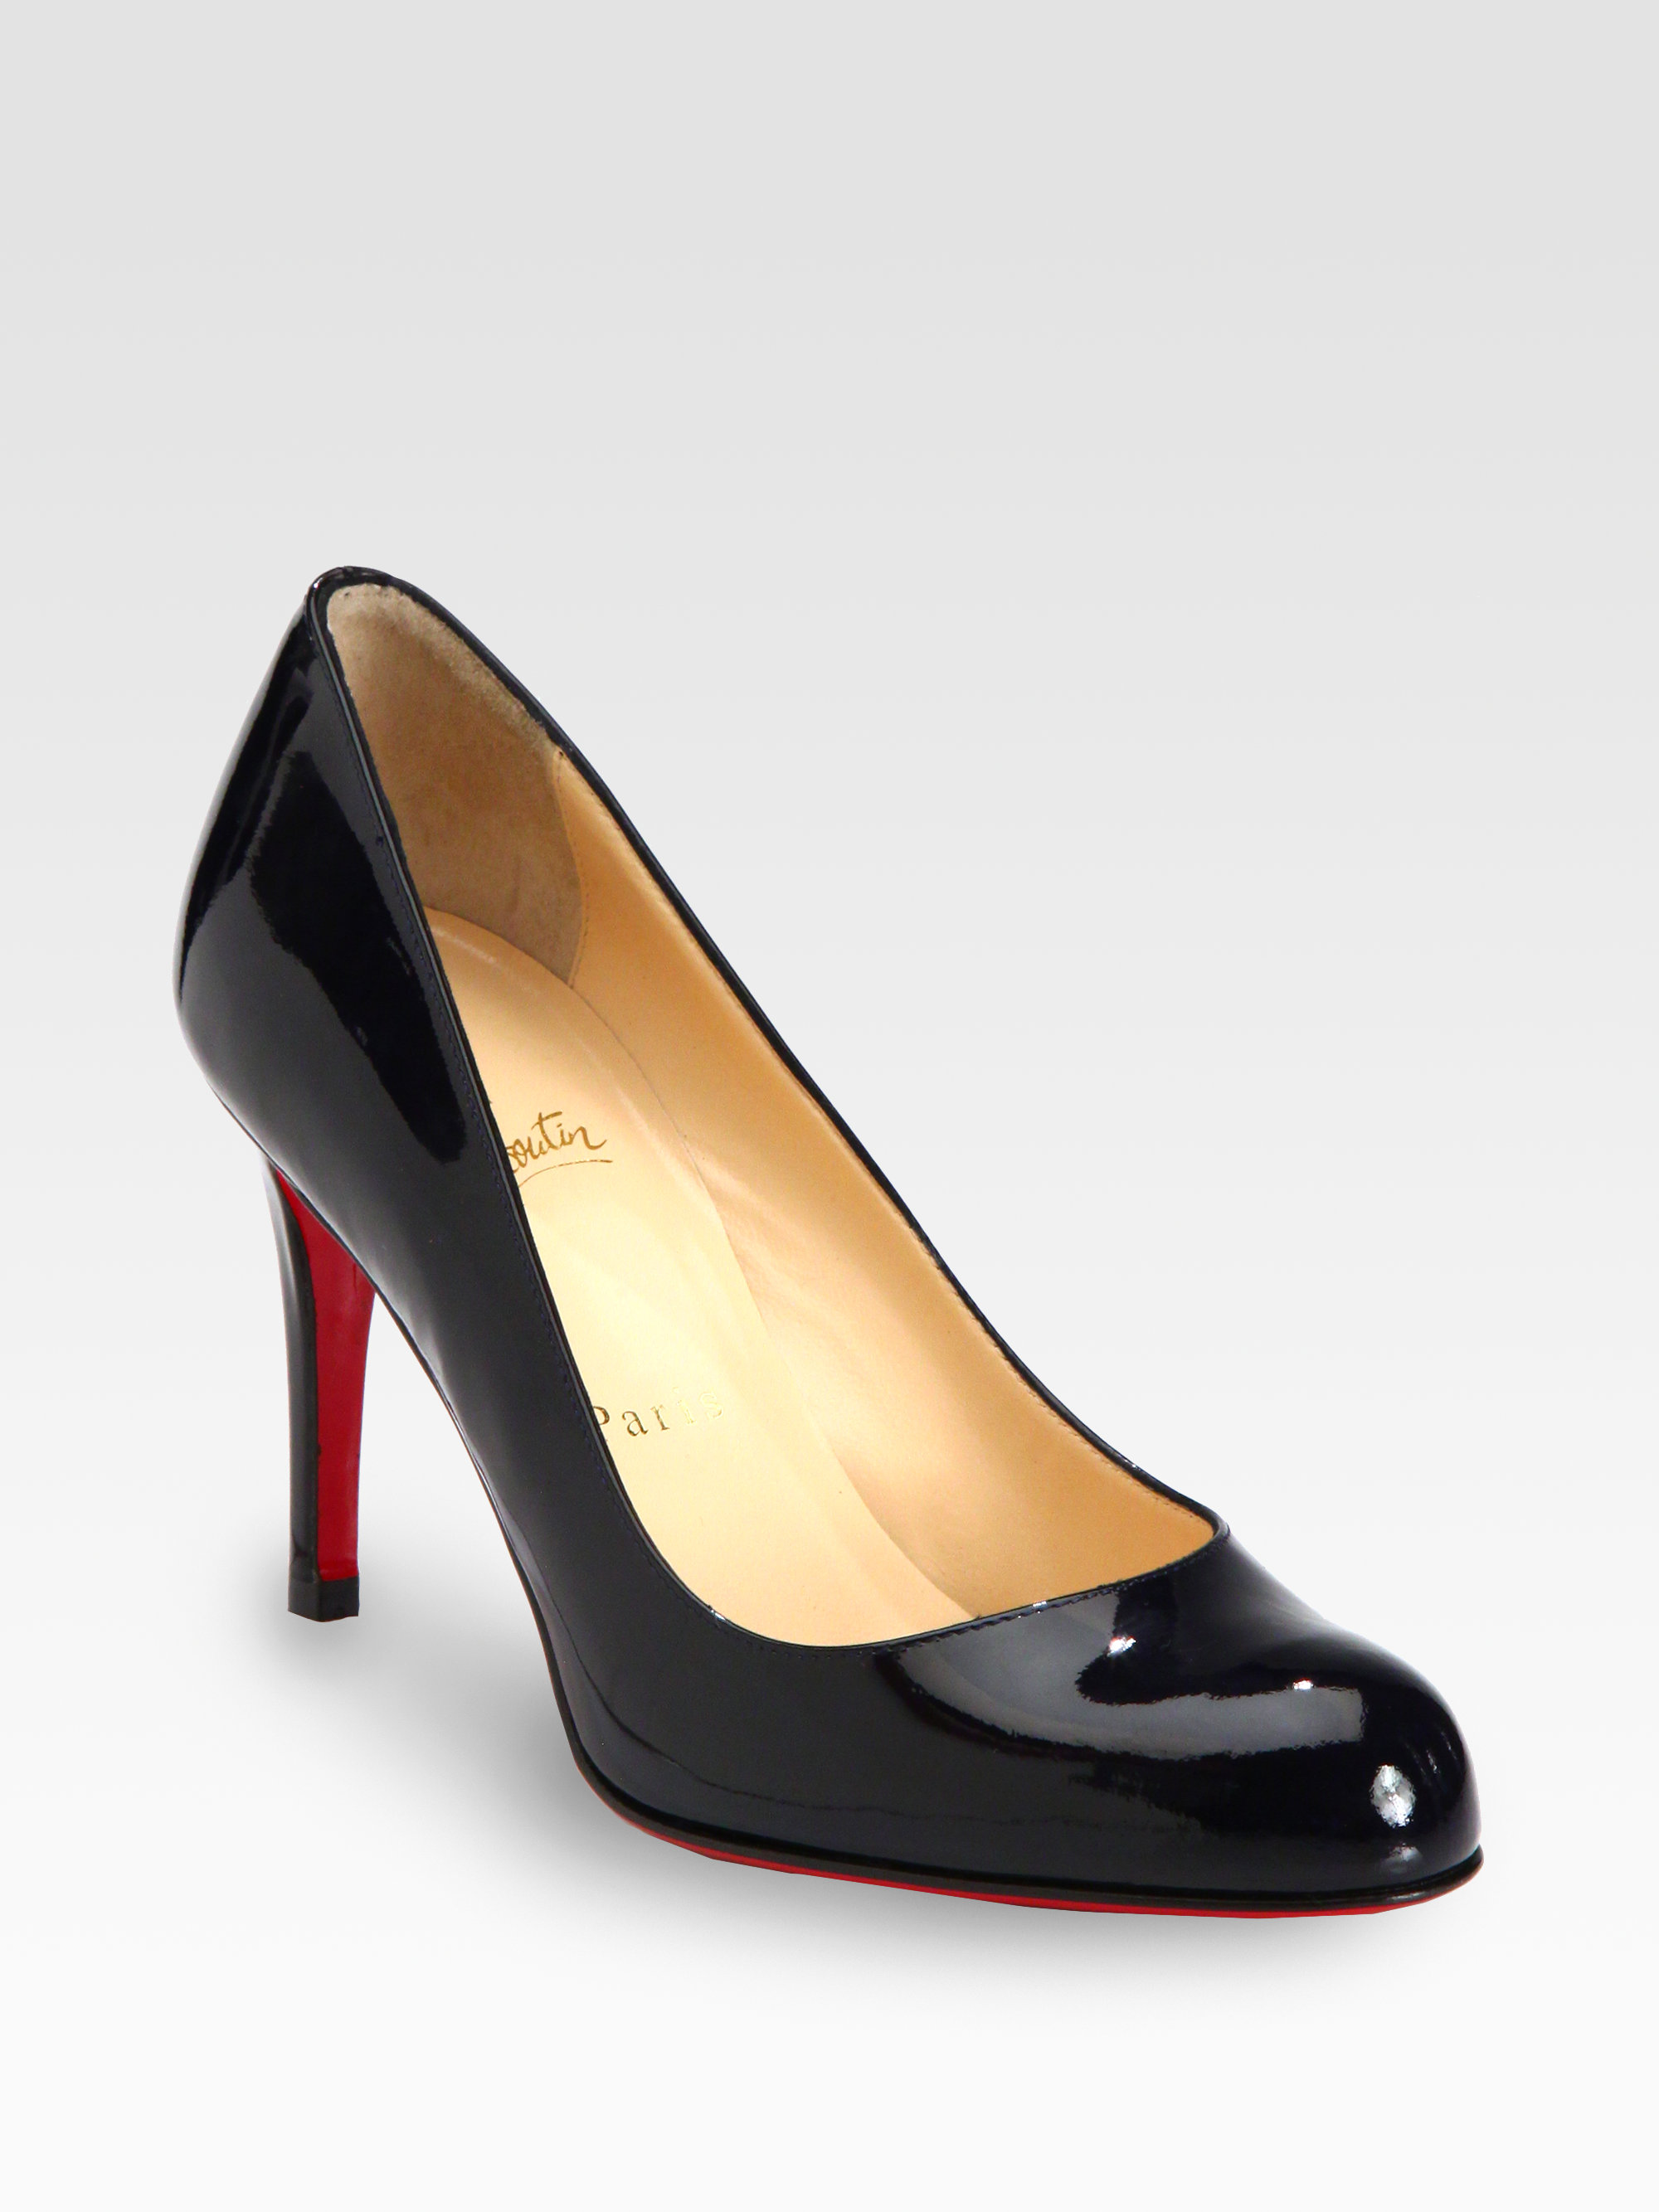 black spiked christian louboutin heels - Artesur ? christian louboutin round-toe simple pumps Navy patent ...